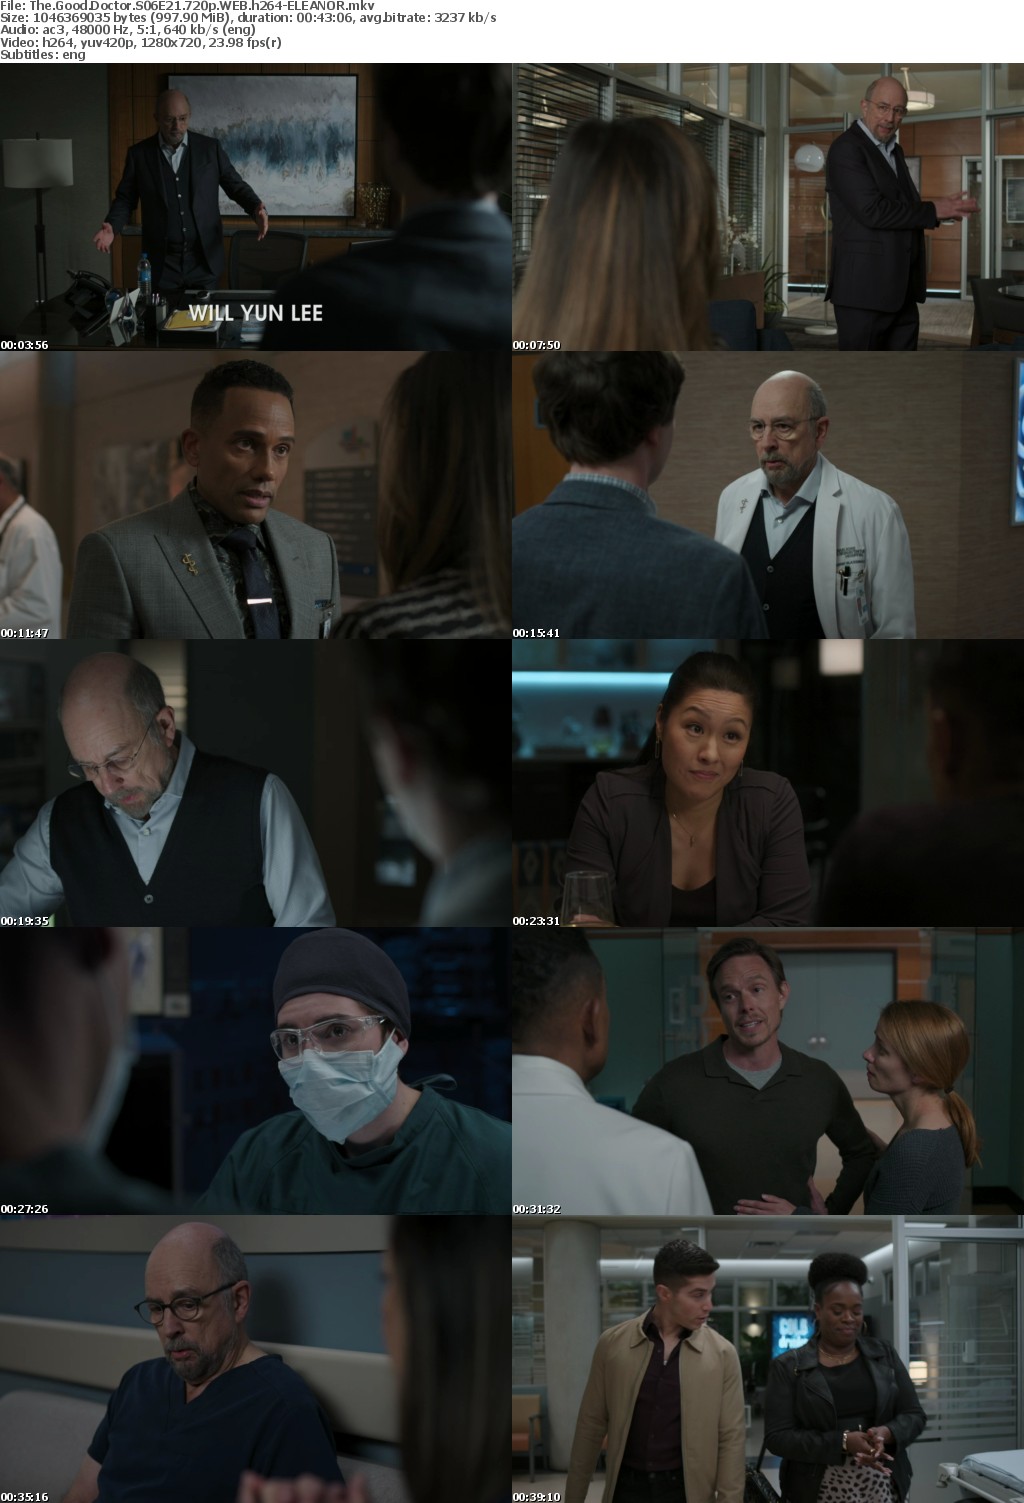 The Good Doctor S06E21 720p WEB h264-ELEANOR